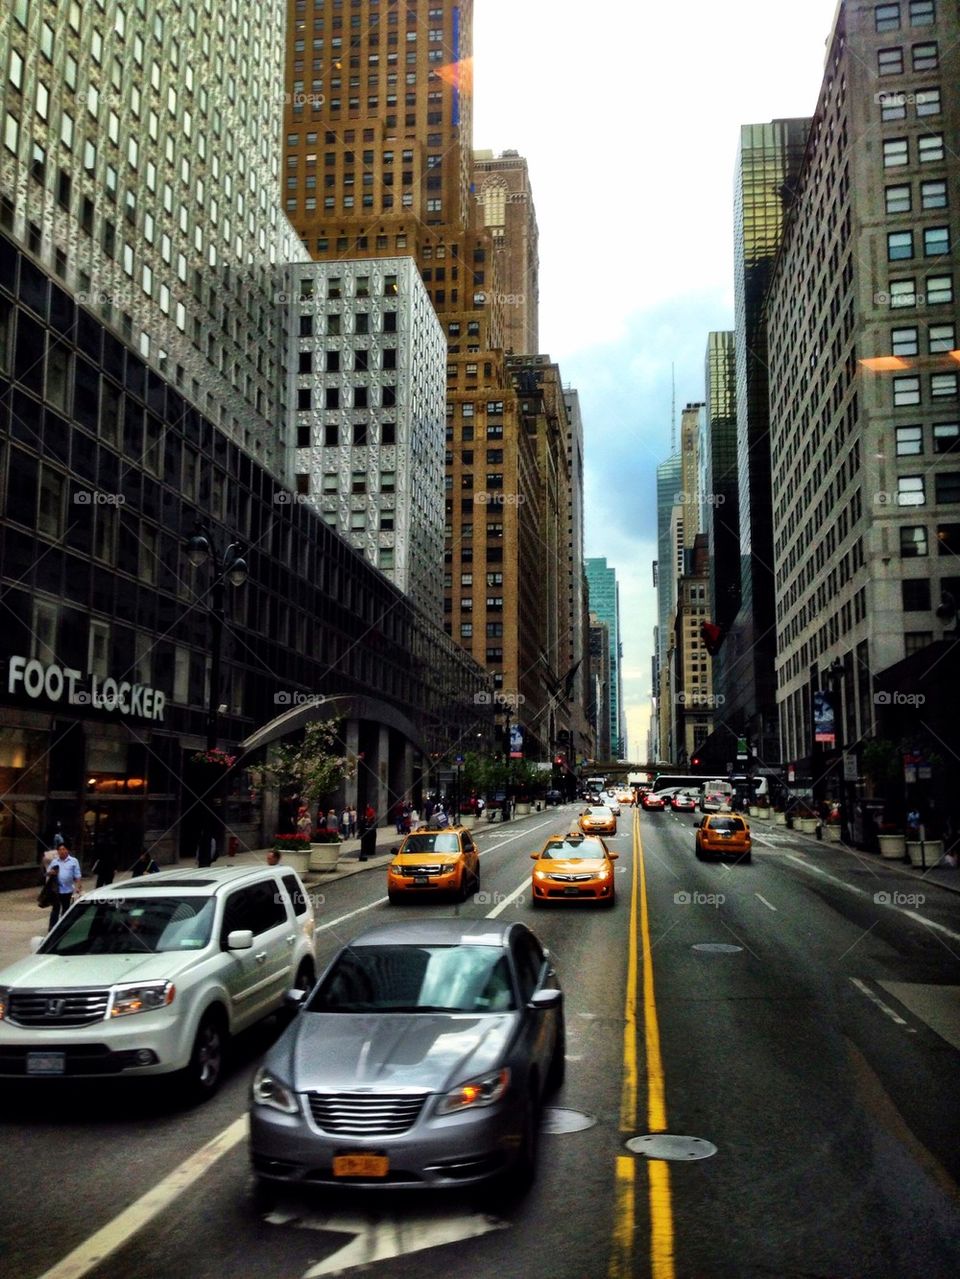 New Yorker, Traffic, City that never sleeps